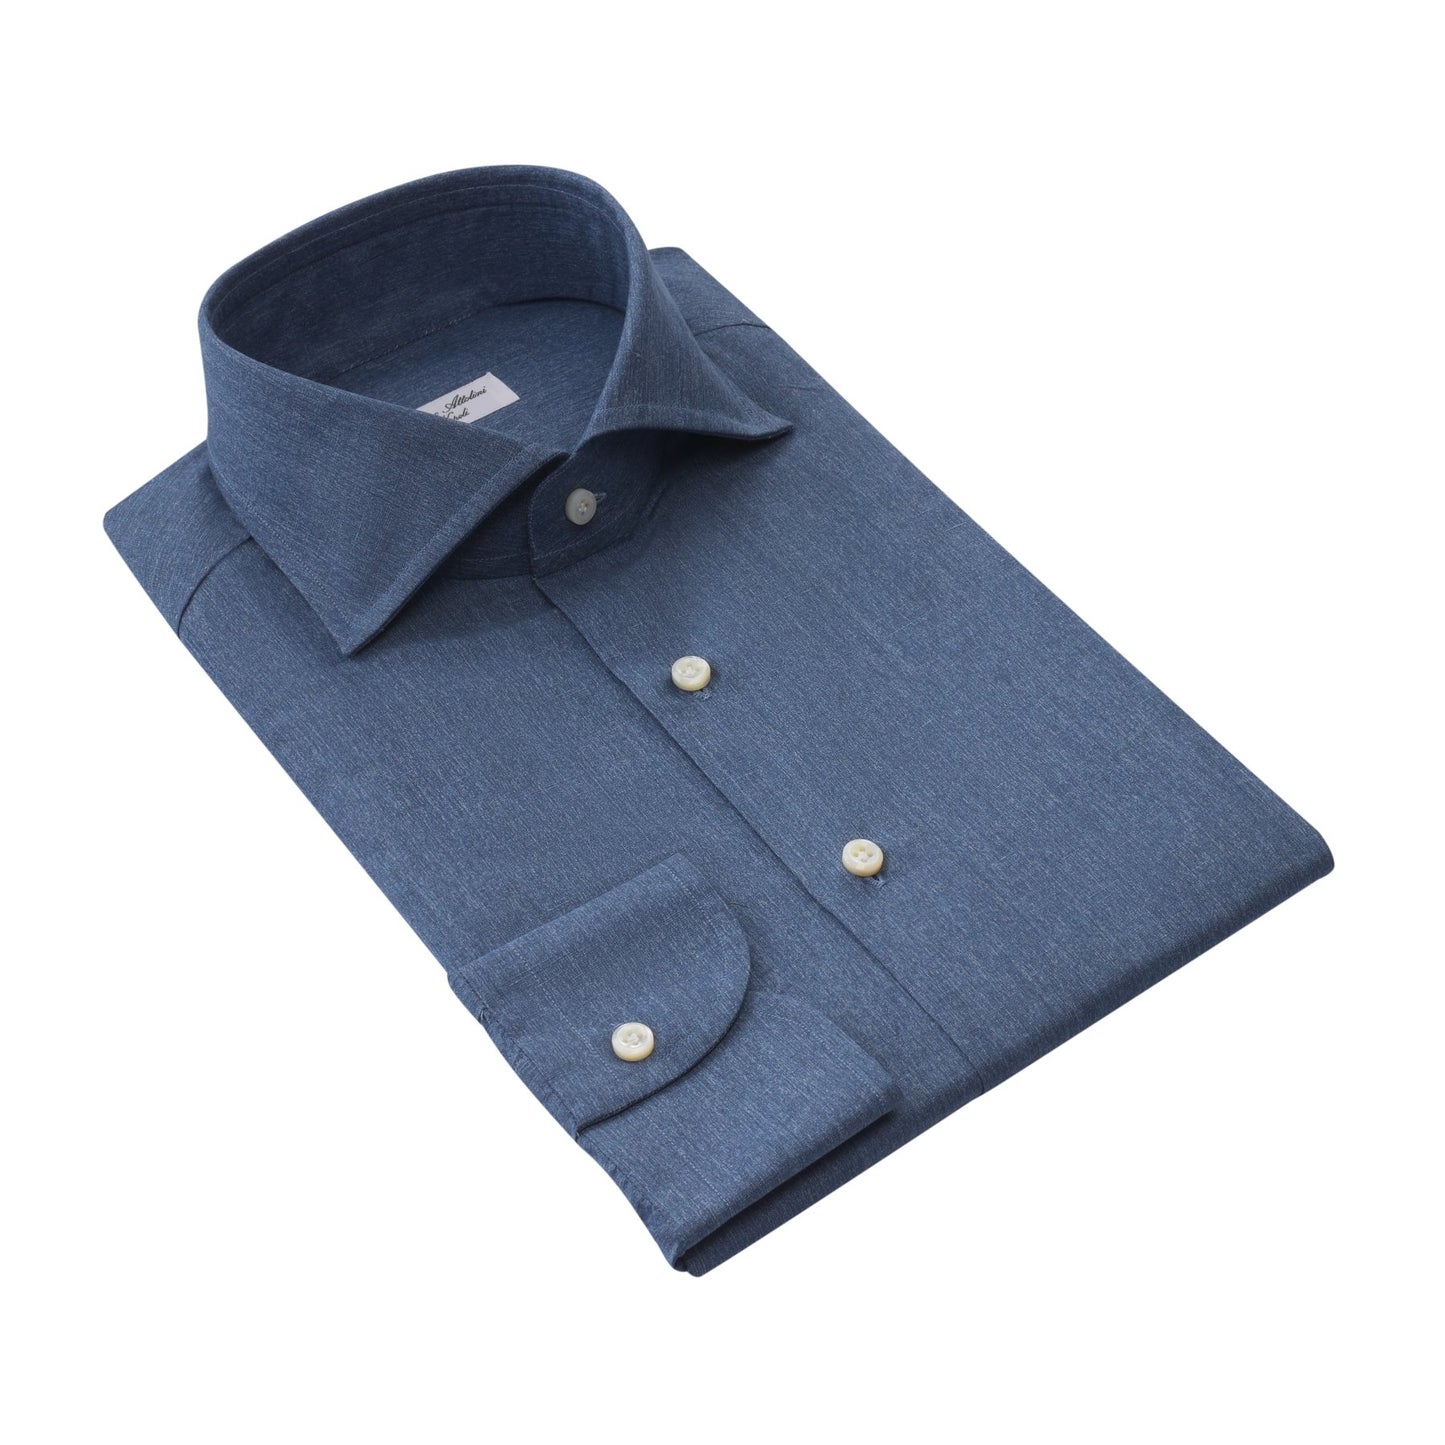 Cesare Attolini Tailored-Fit Cotton Shirt in Blue - SARTALE